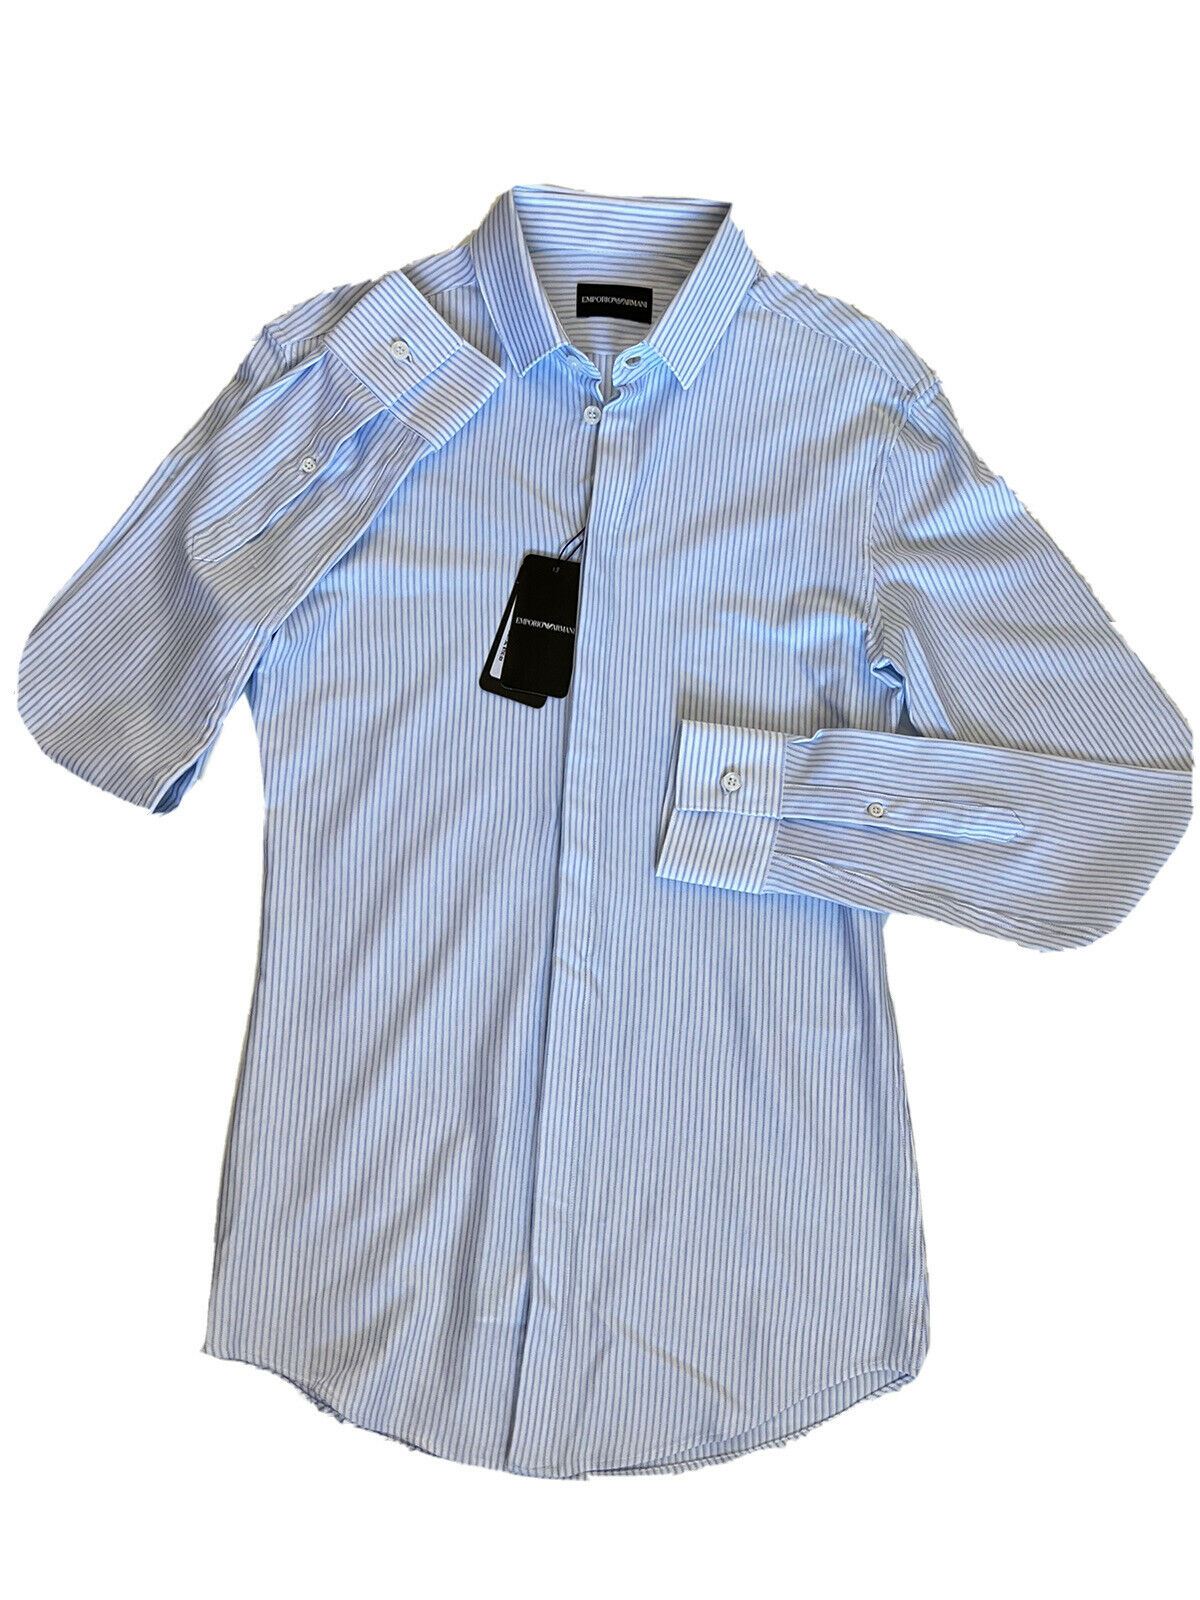 NWT $445 Emporio Armani Классическая рубашка с итальянским воротником, размер 38/15 51CC2T